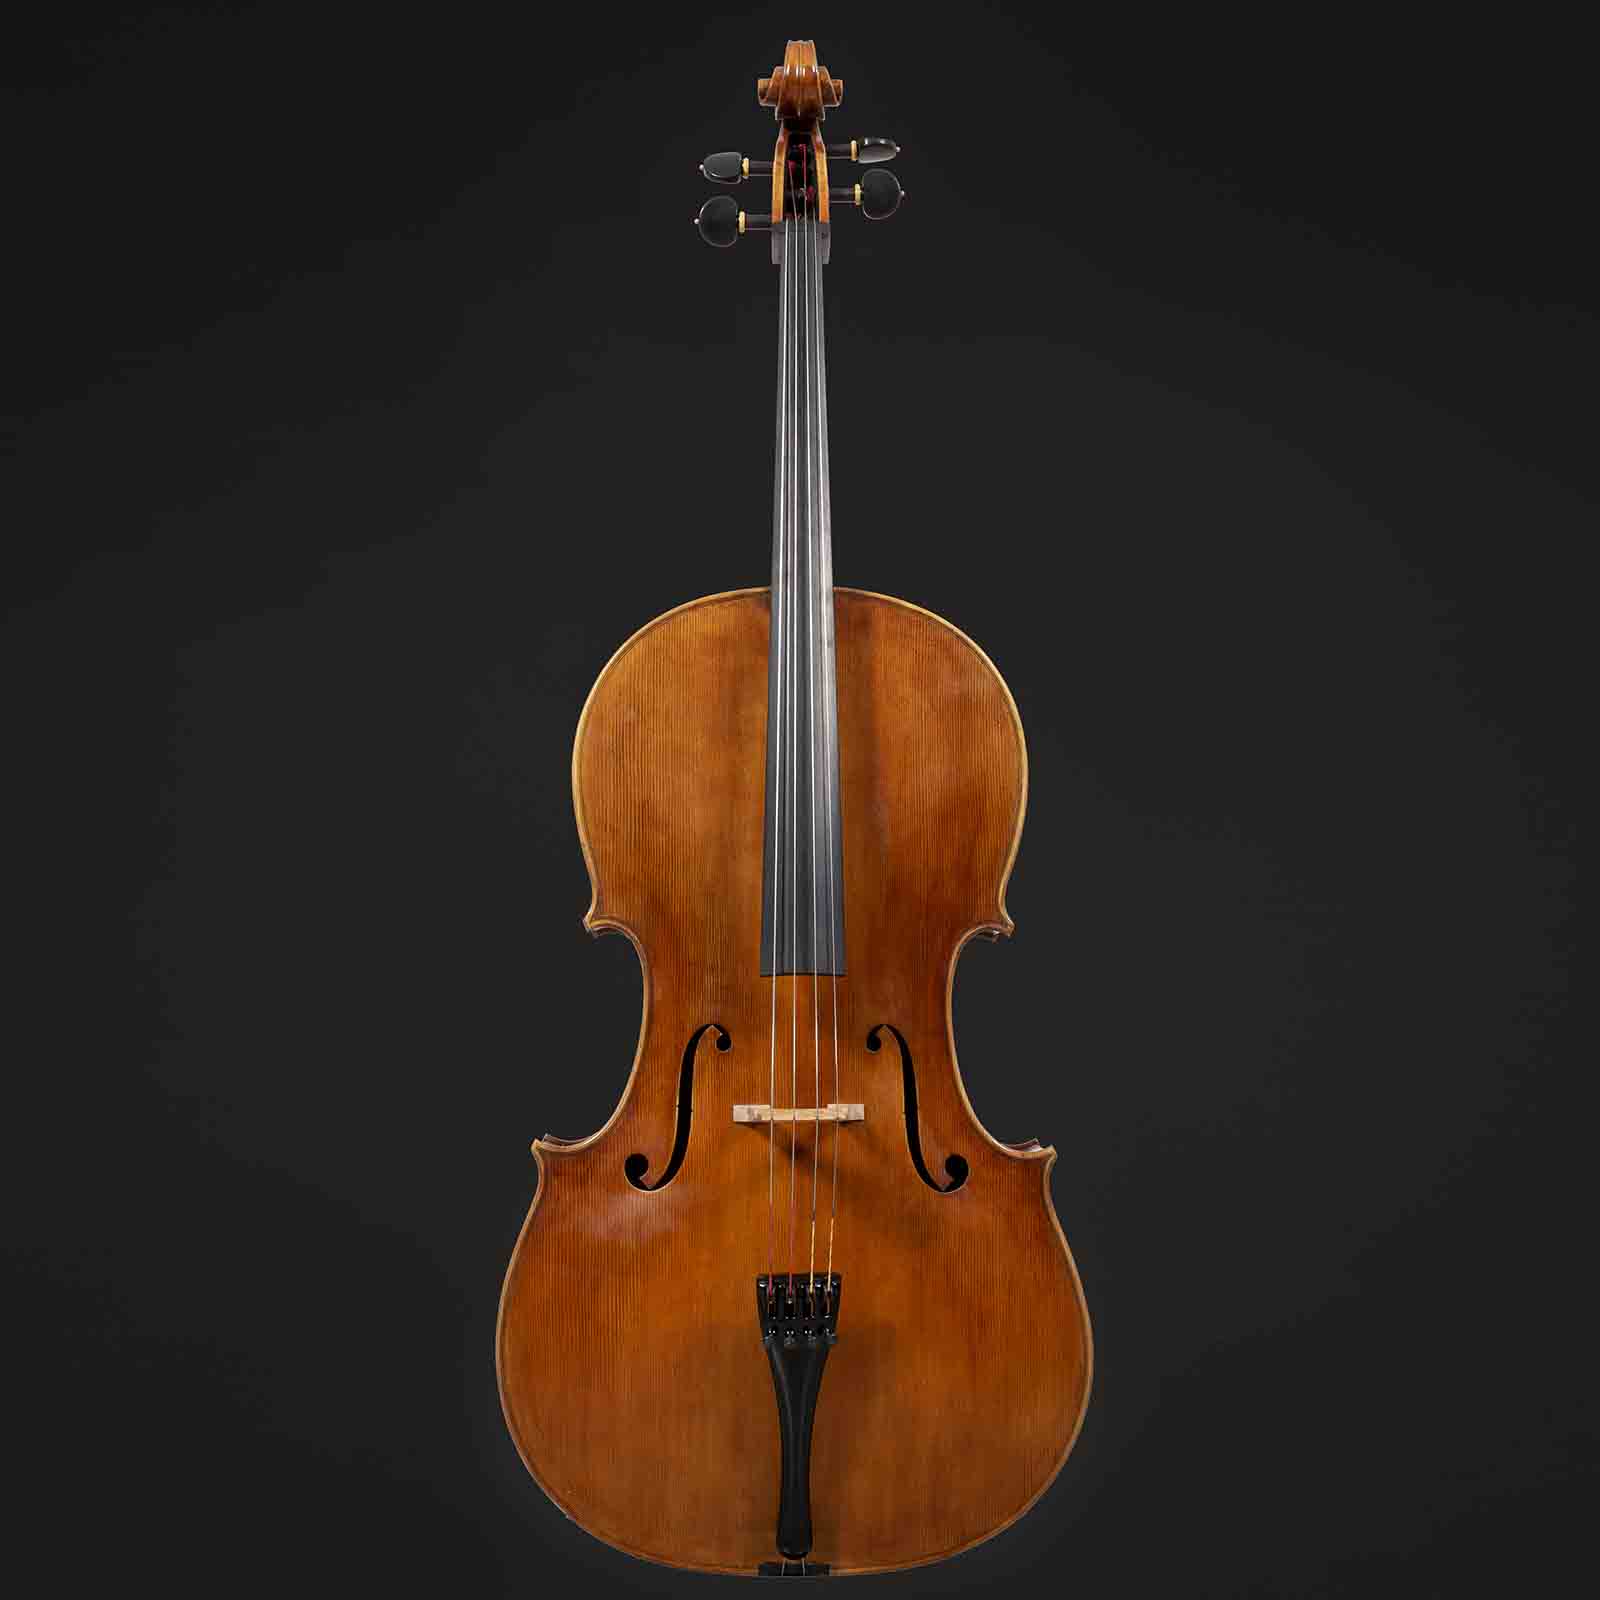 Antonio Stradivari Cremona 1700 “Cristiani“ “Aeos“ - Image 1